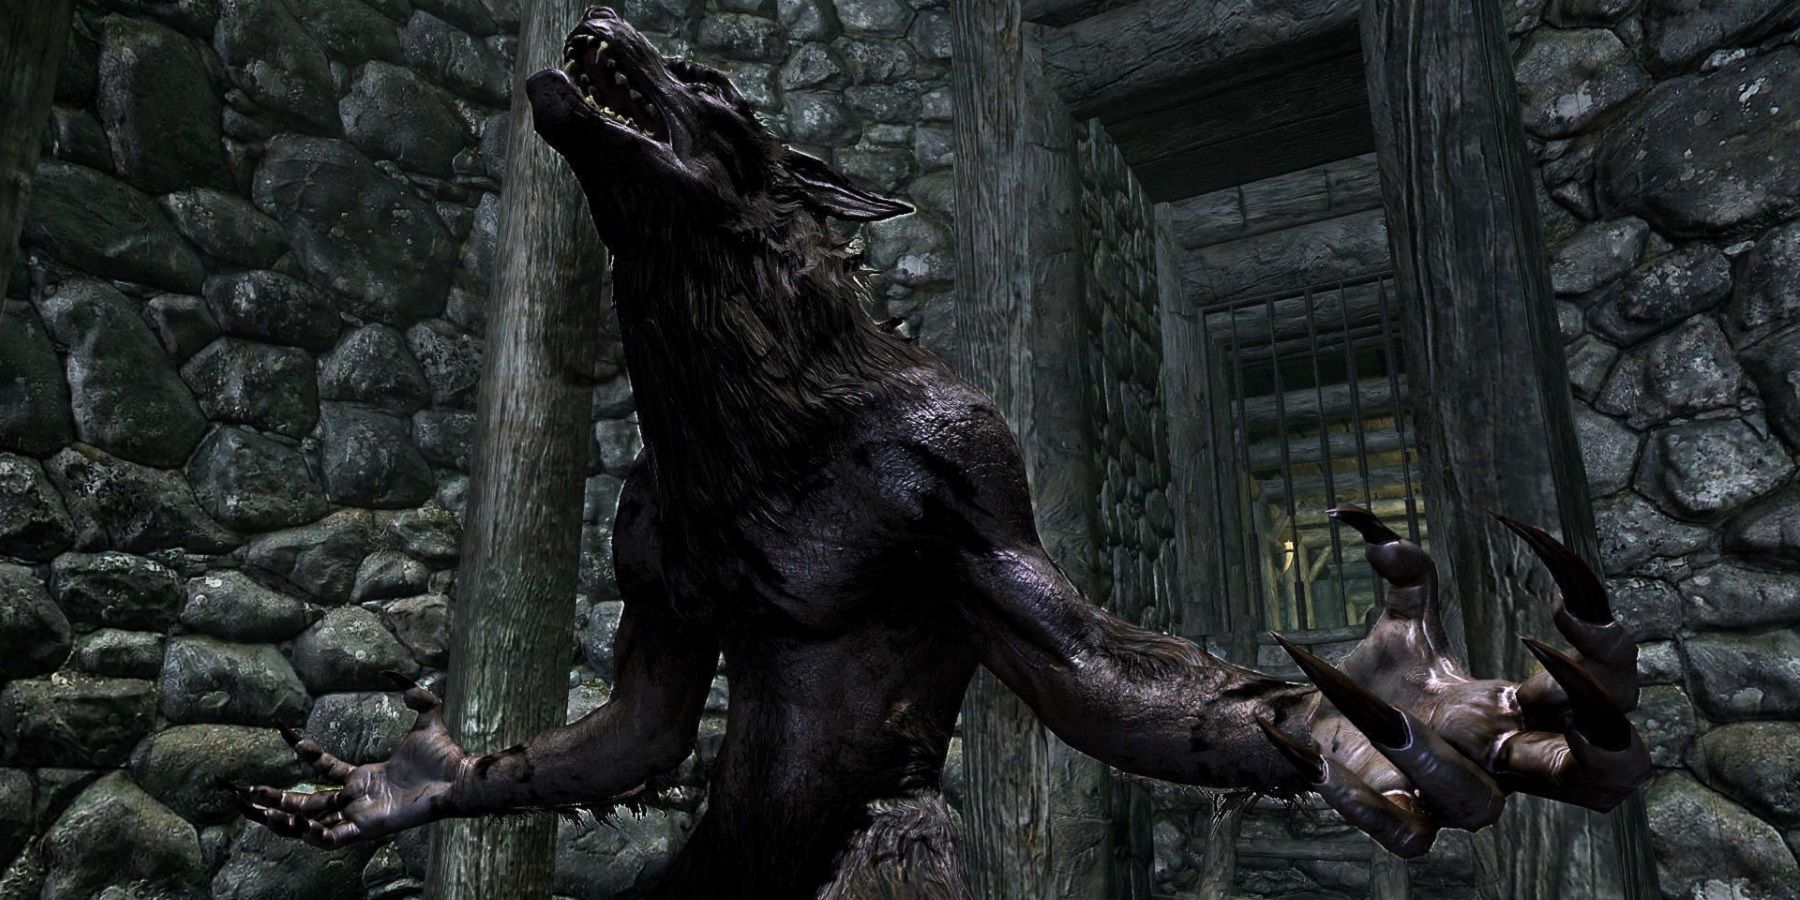 Screenshot from The Elder Scrolls 5: Skyrim showing a werewolf howling in a dungeon.